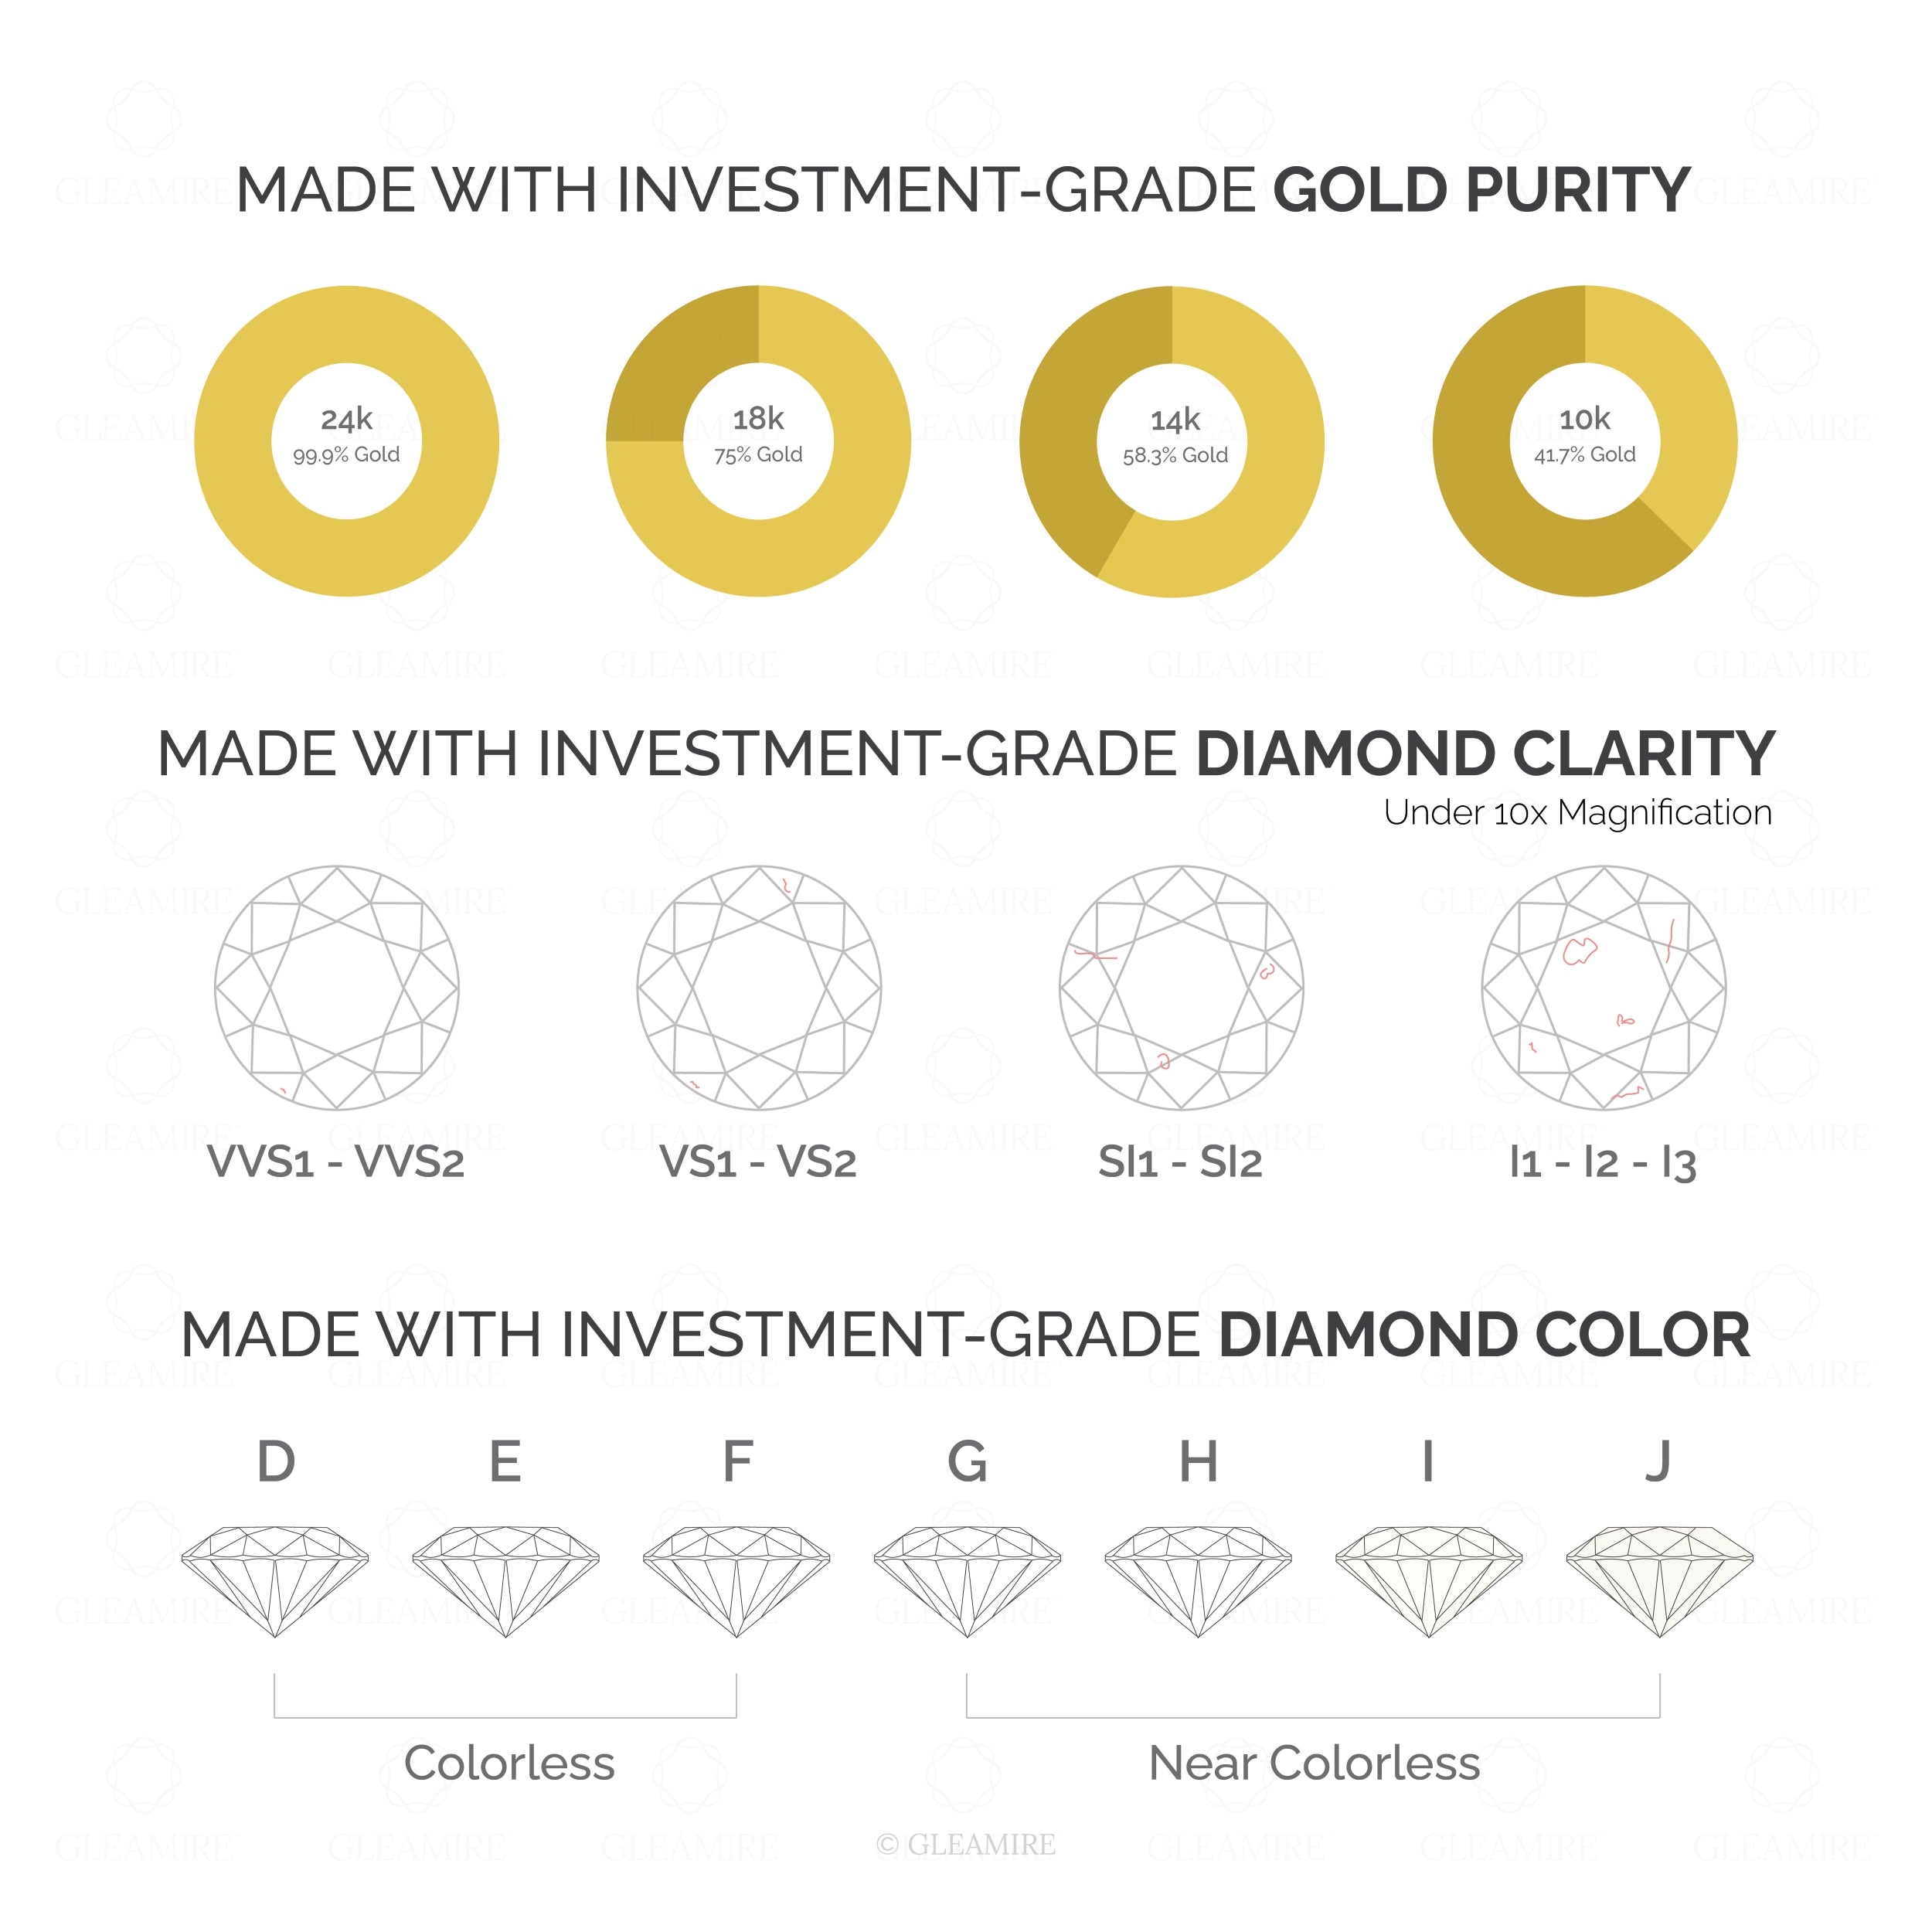 Certified 18K Gold 1.5ct Natural Diamond F-VVS Chandelier Rose Pendant Earrings Yellow Set